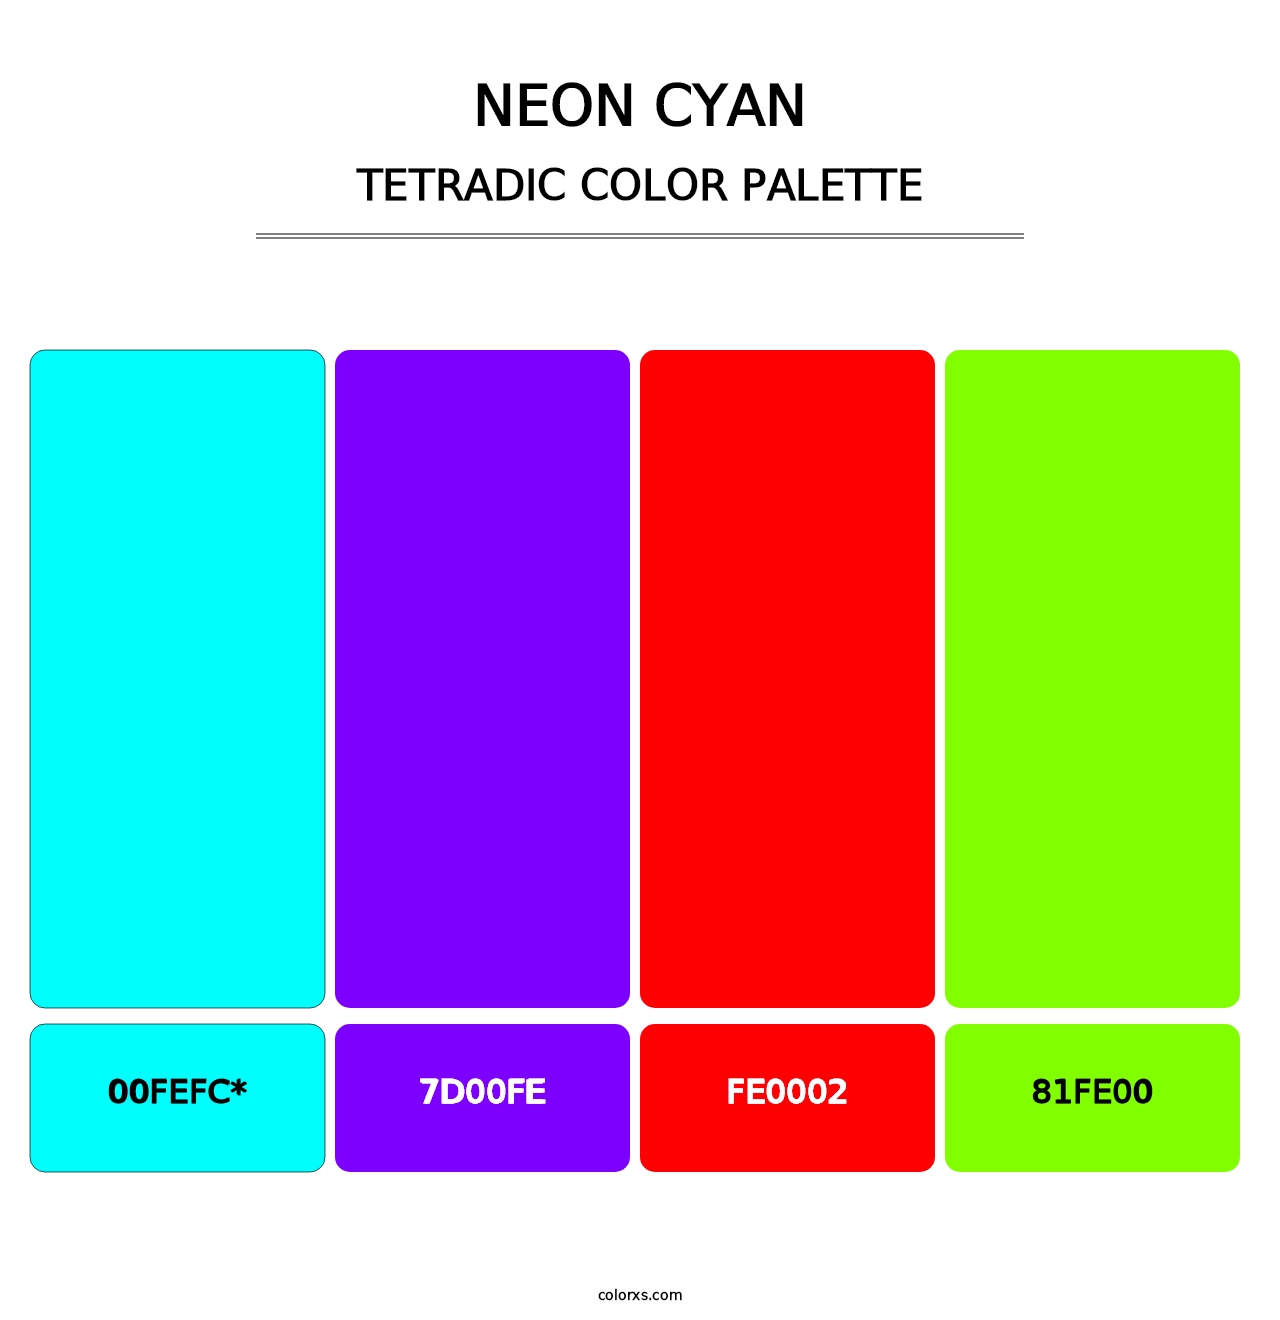 Neon Cyan - Tetradic Color Palette